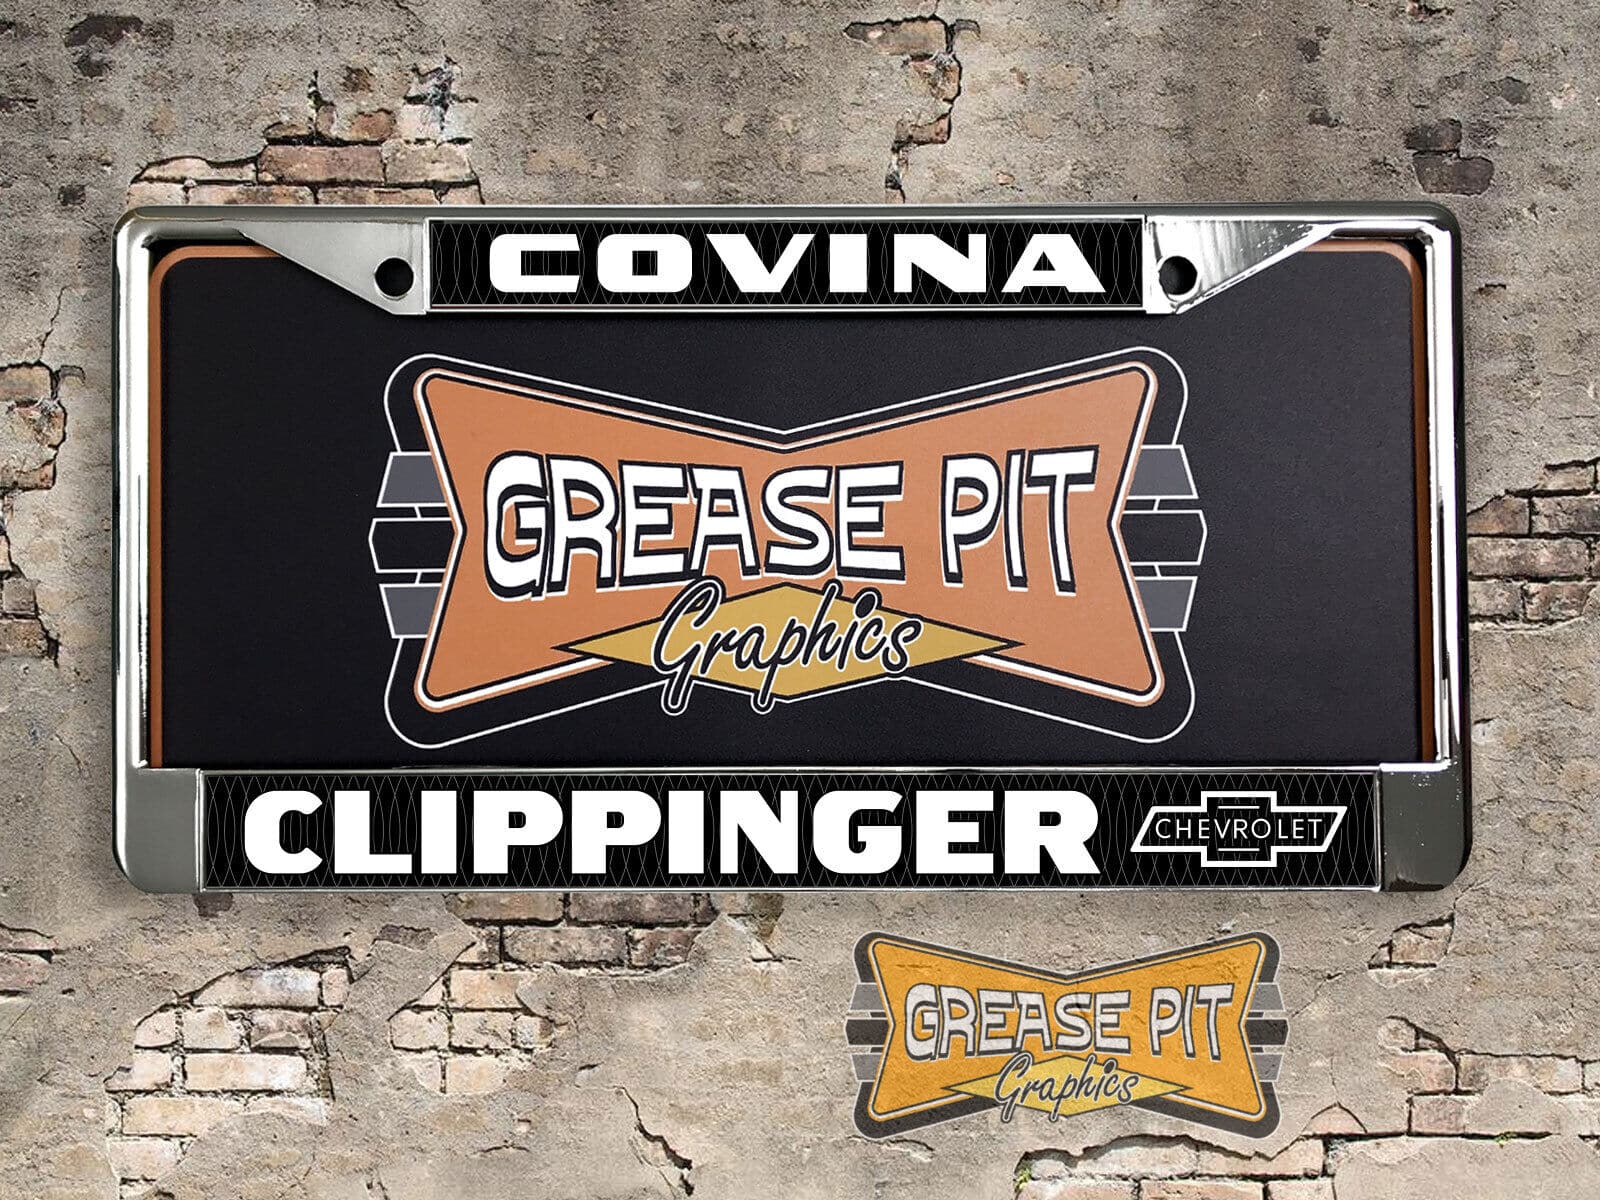 Clippinger Chevrolet Covina California License Plate Frame Tribute